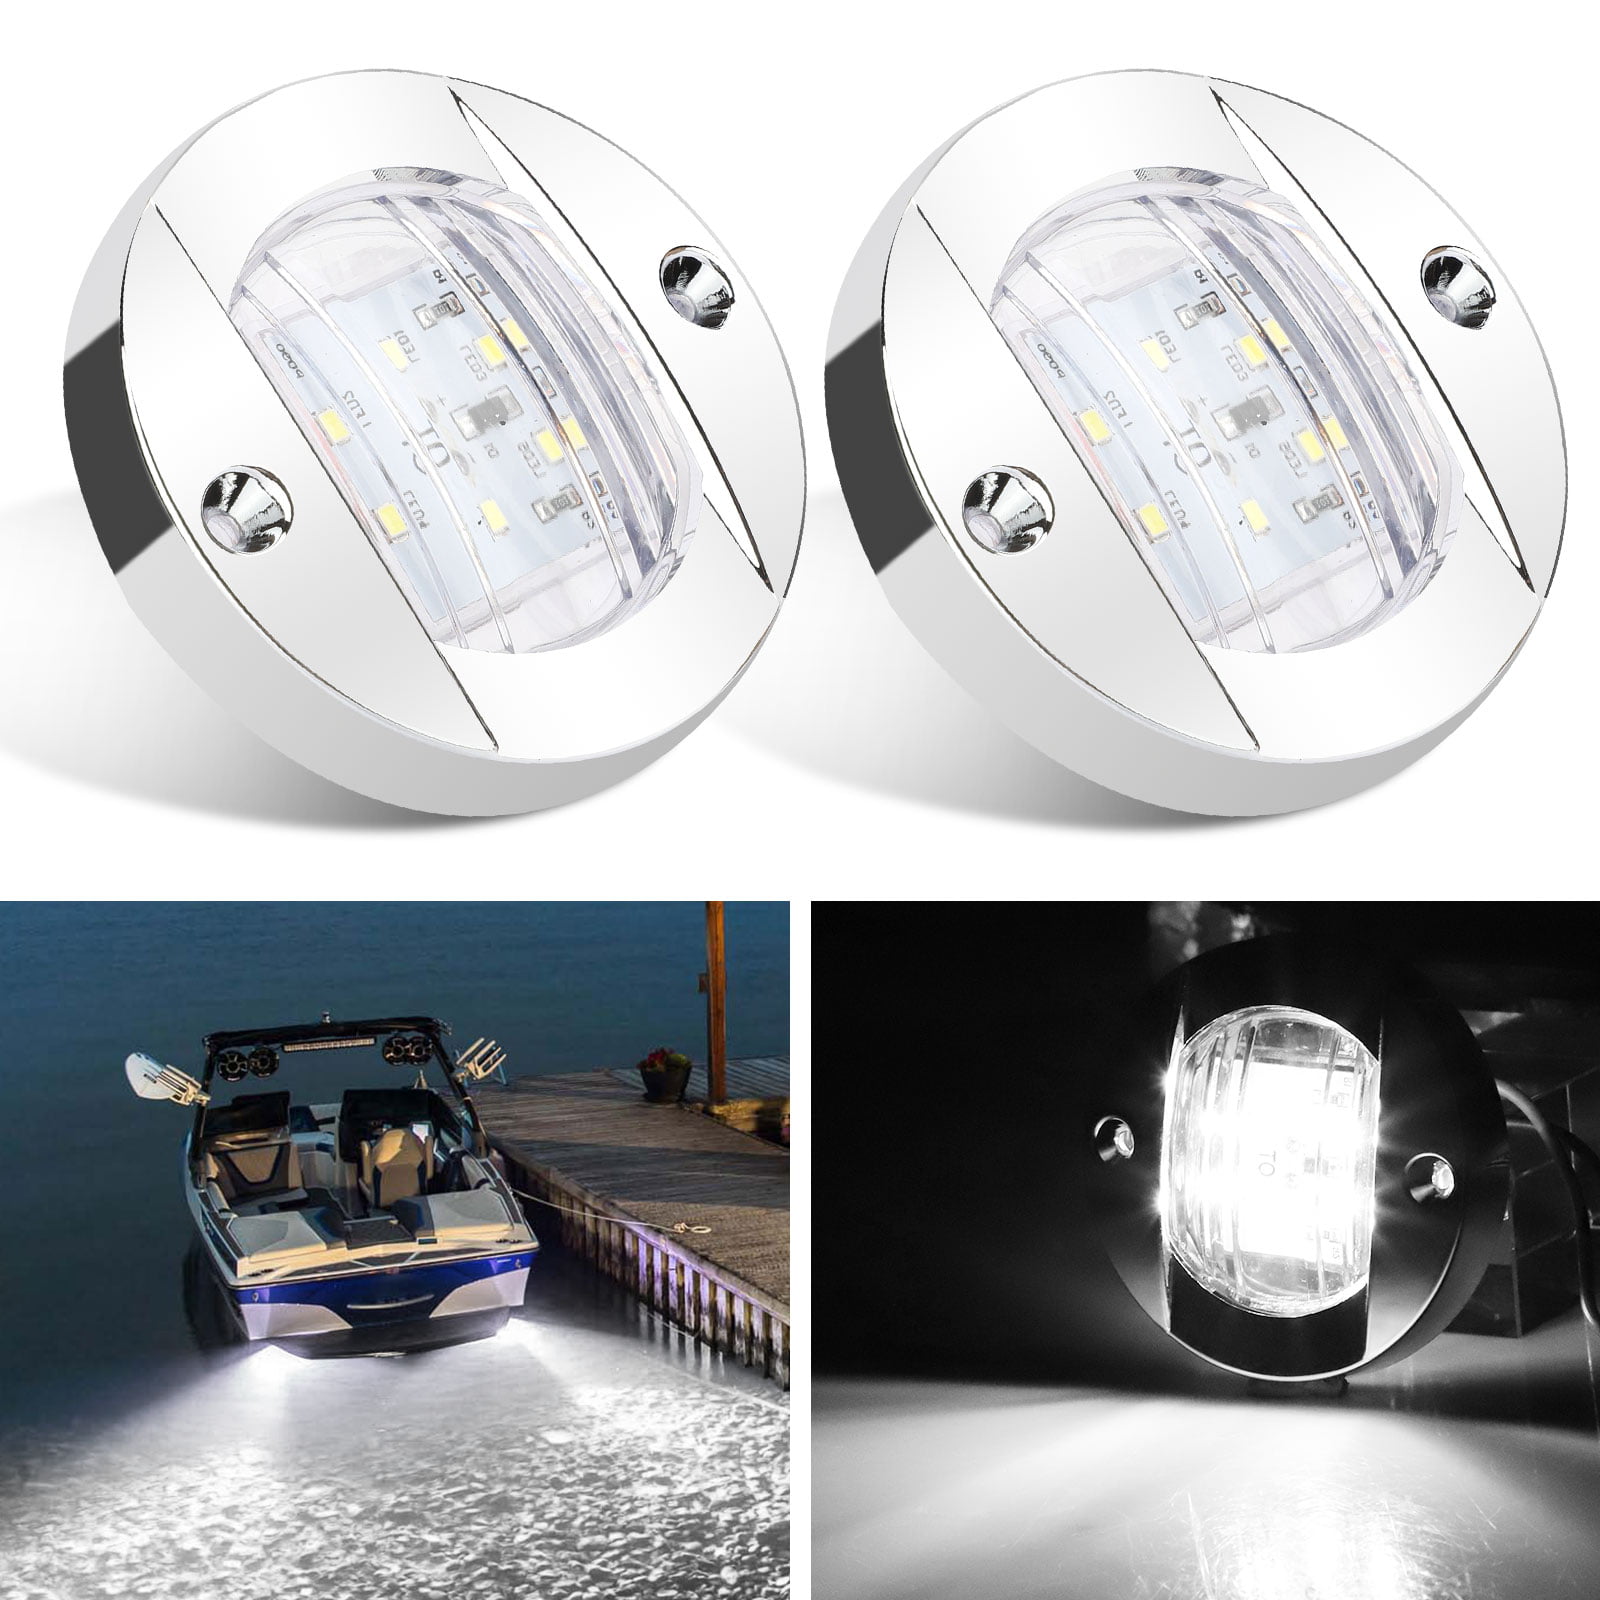 Pactrade Marine 2PCS Boat RV Car Warm White LED Ceiling Interior Courtesy Light 